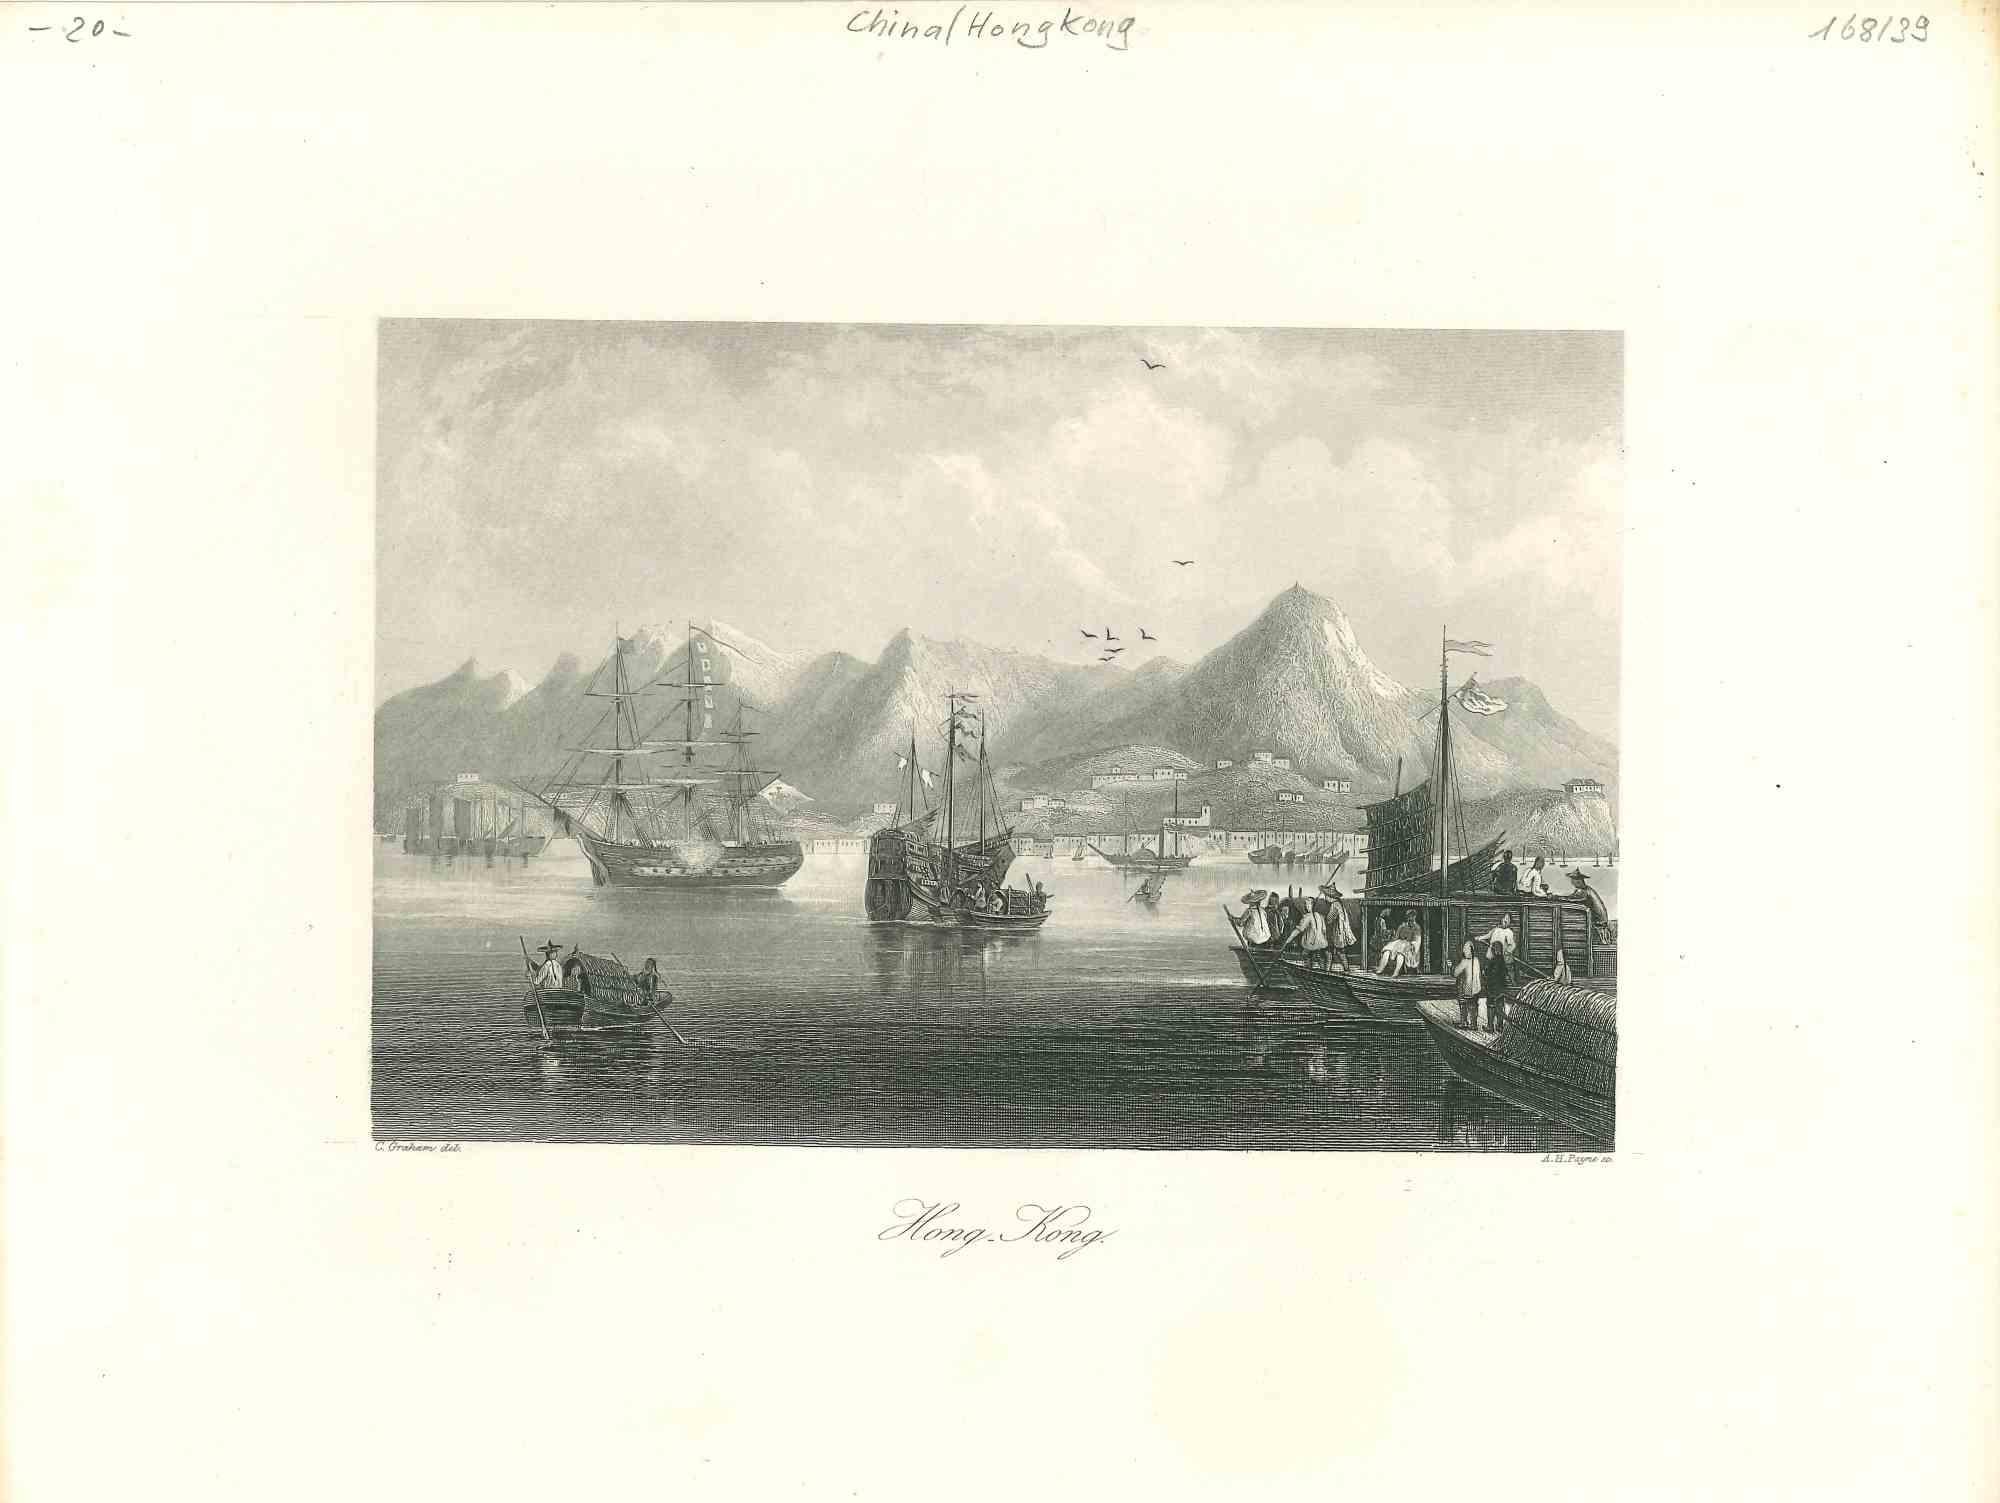 Ancient View of Hong Kong - Original Lithograph - Early 19th Century